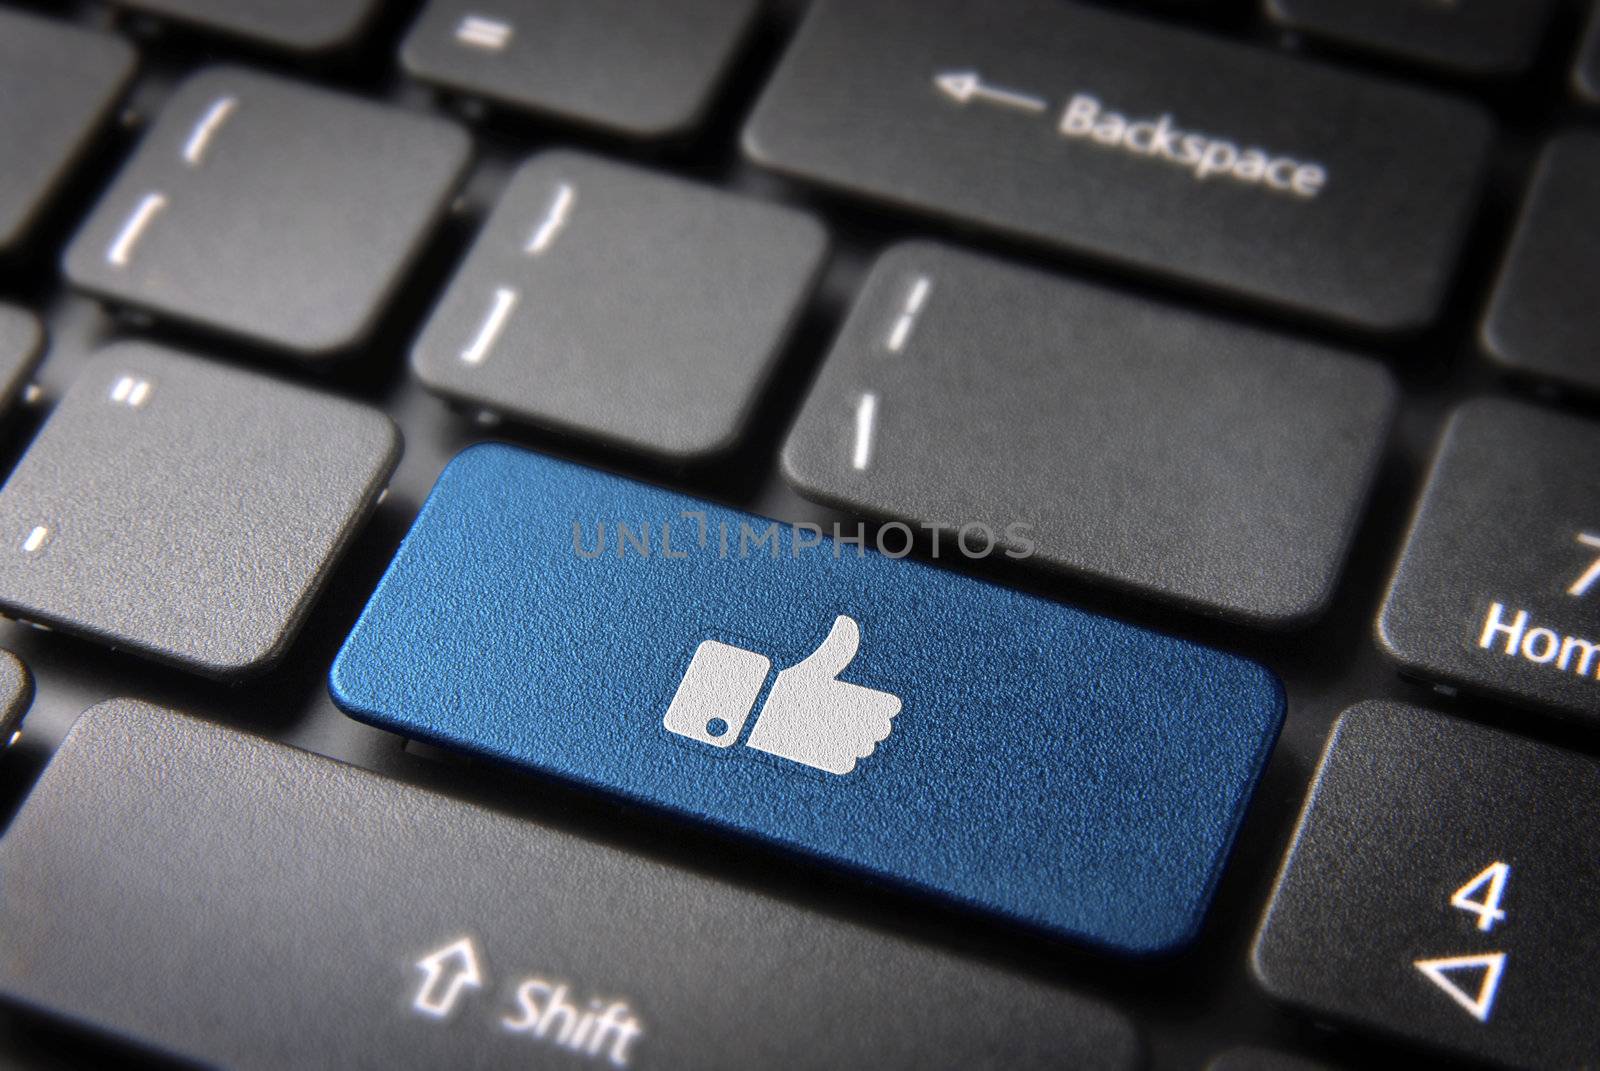 Thumb up blue keyboard key, social media background by cienpies